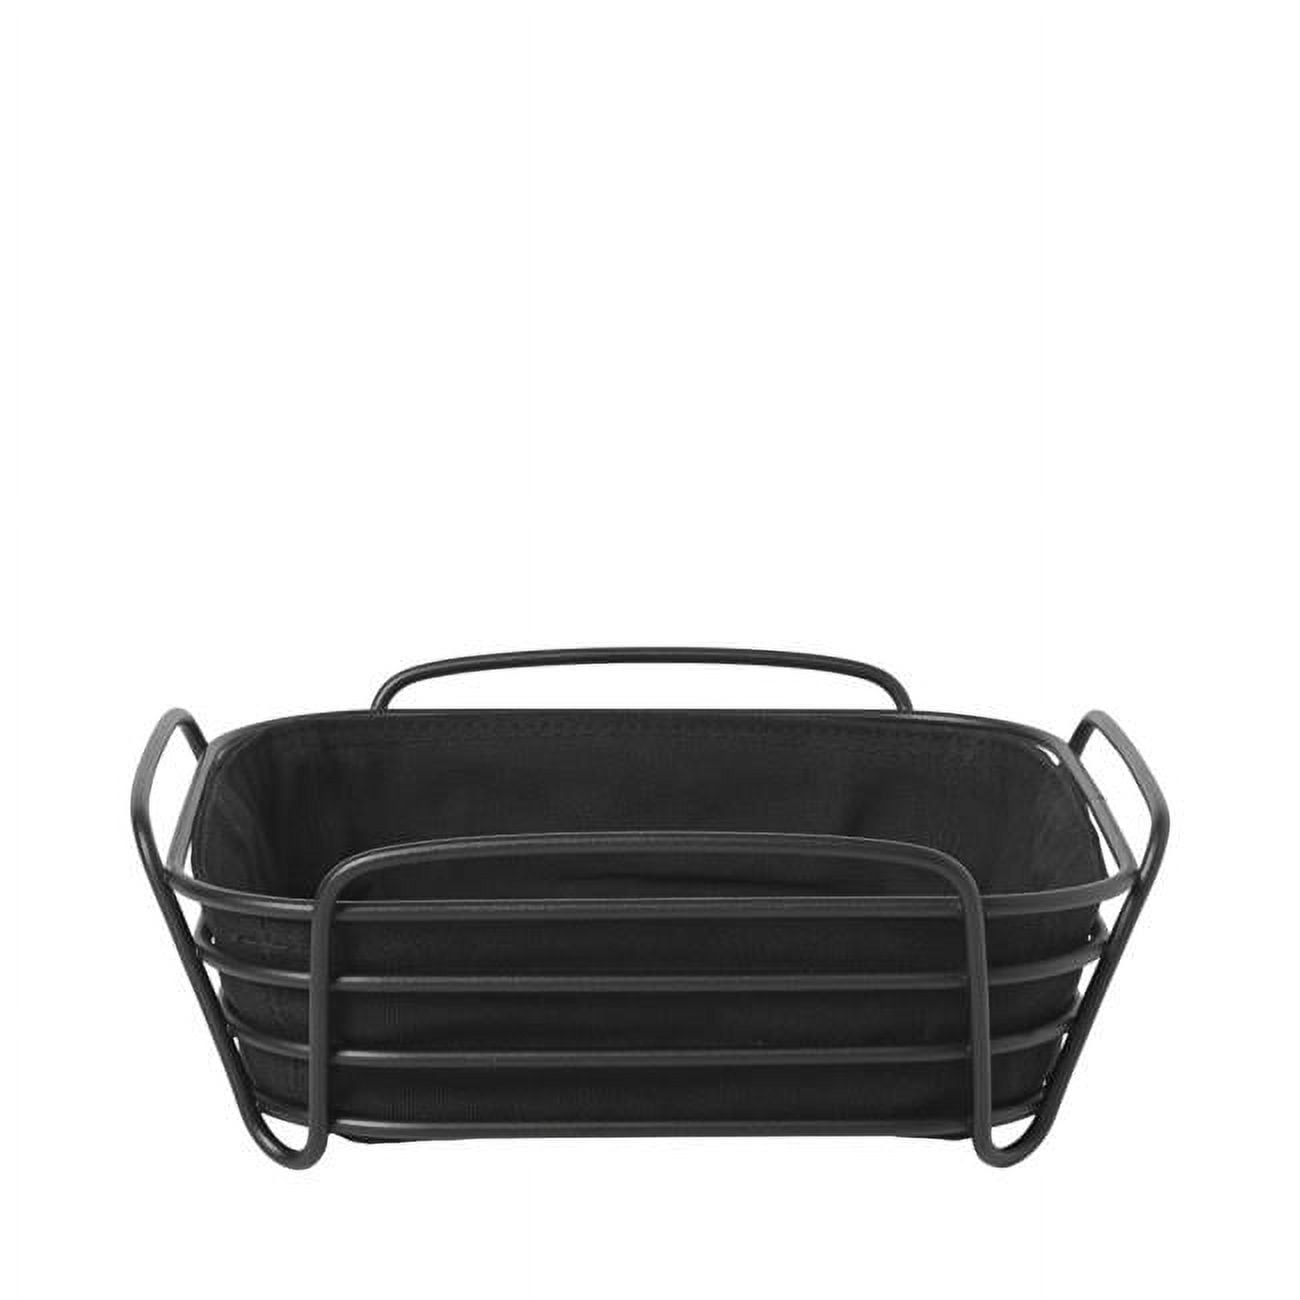 Picture of Blomus 63872 10 x 10 in. Delara Bread Basket, Black - Large